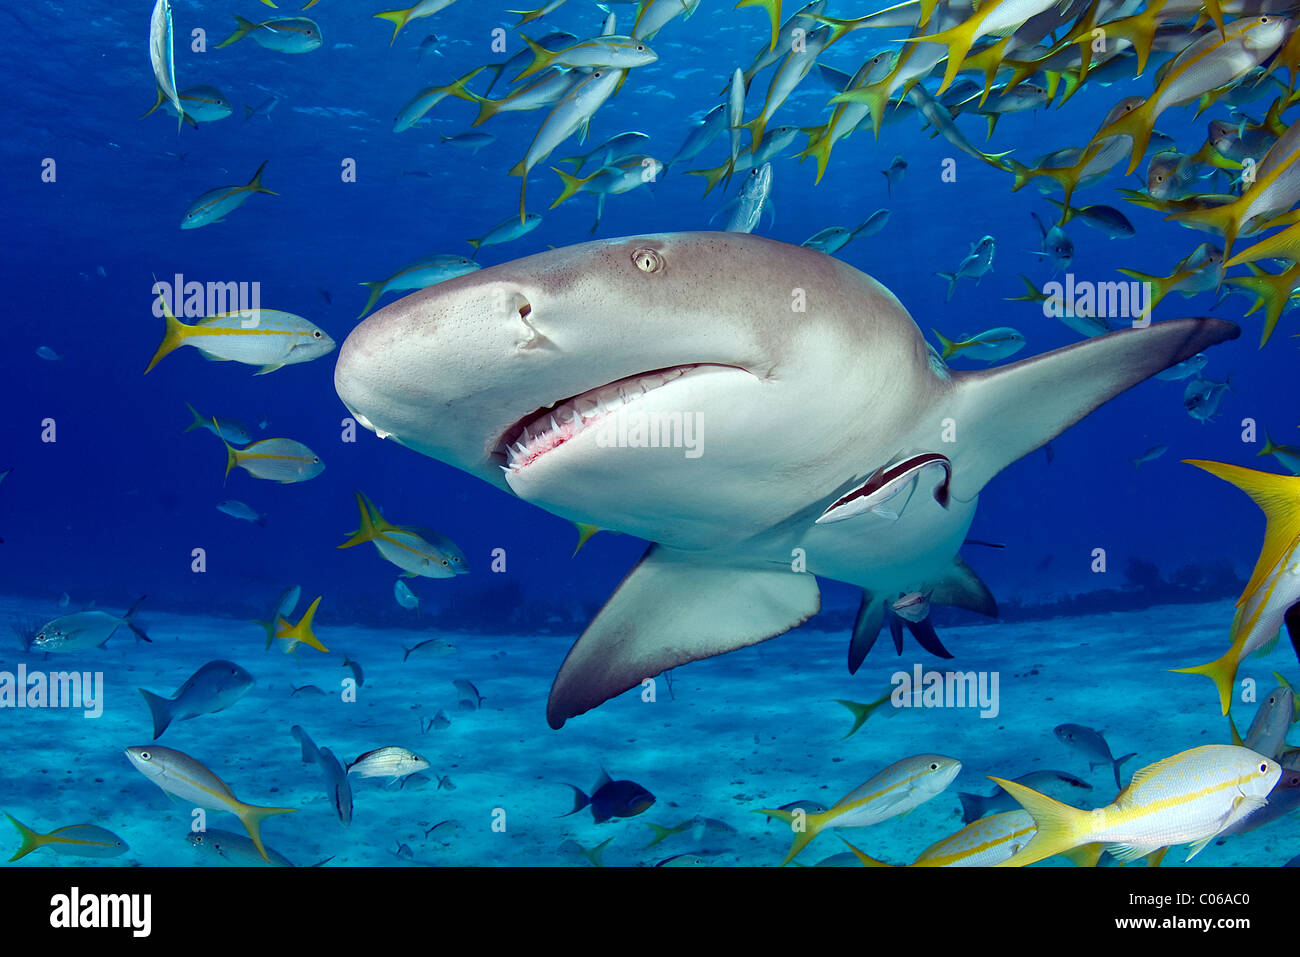 Lemon Shark surrounded by smaller fish, Bahamas Stock Photo